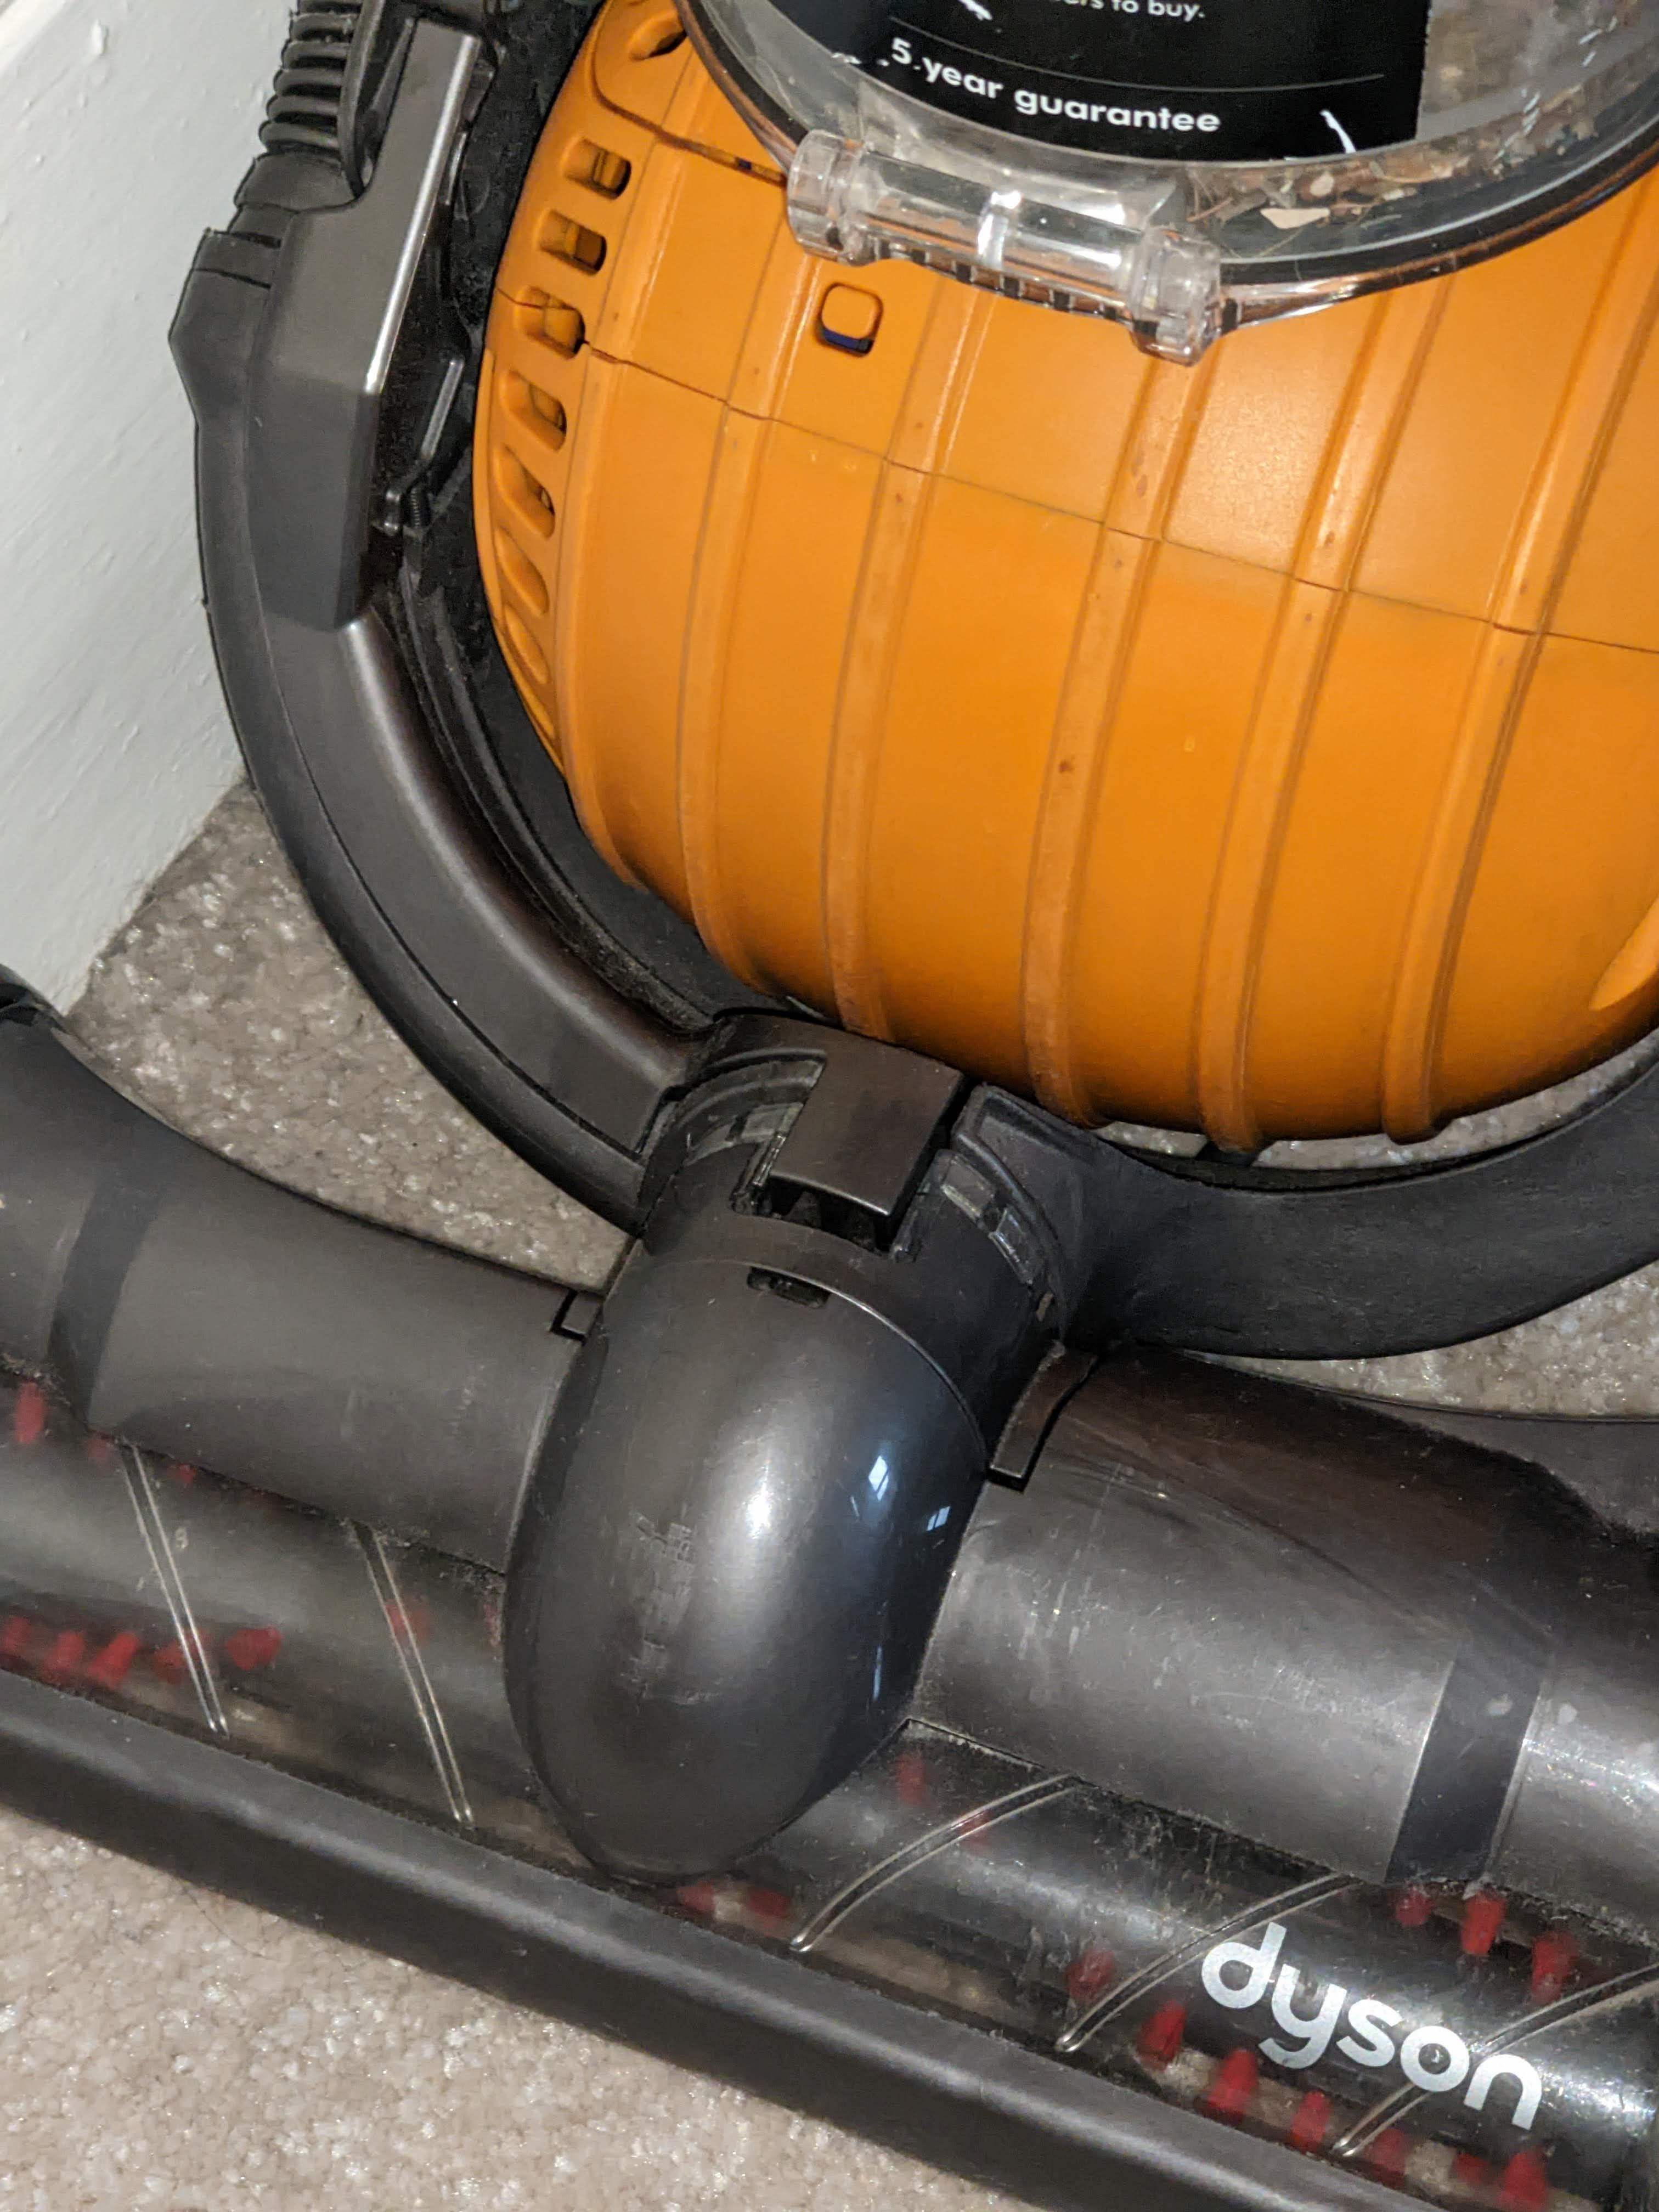 Dyson DC24 Multi Floor Upright Vacuum Cleaner - missing part? Dyson Community